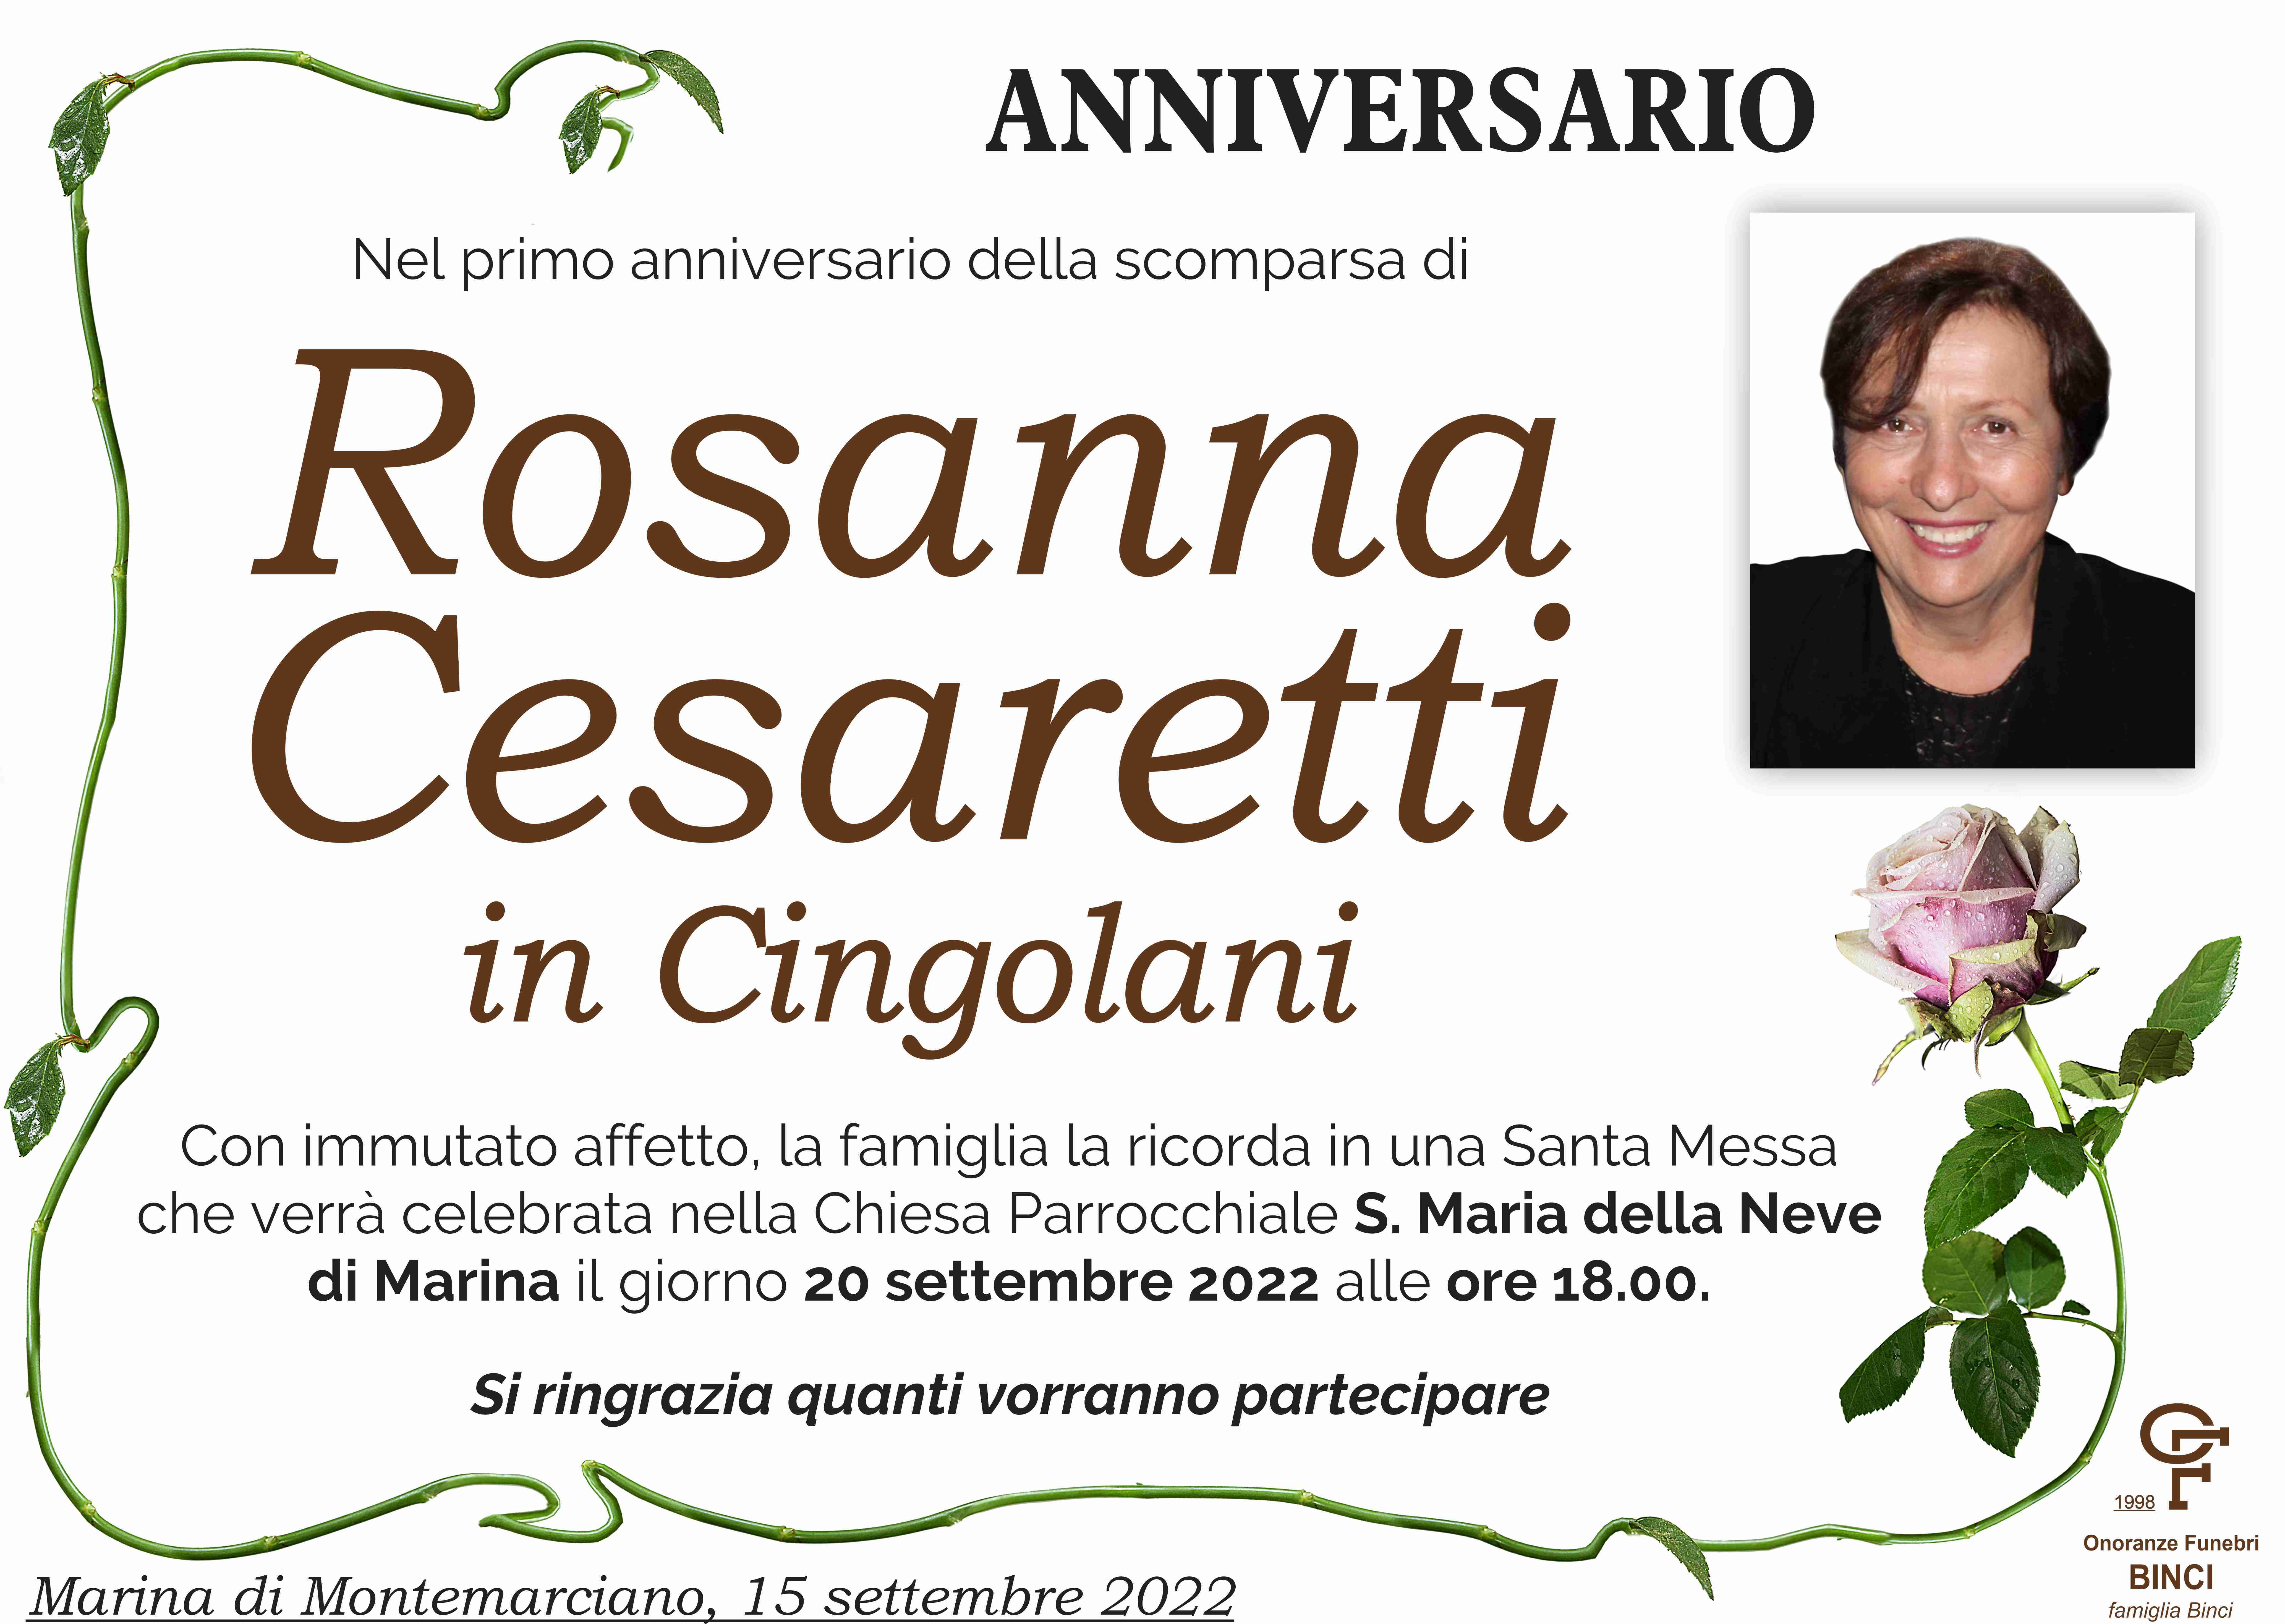 Rosanna Cesaretti